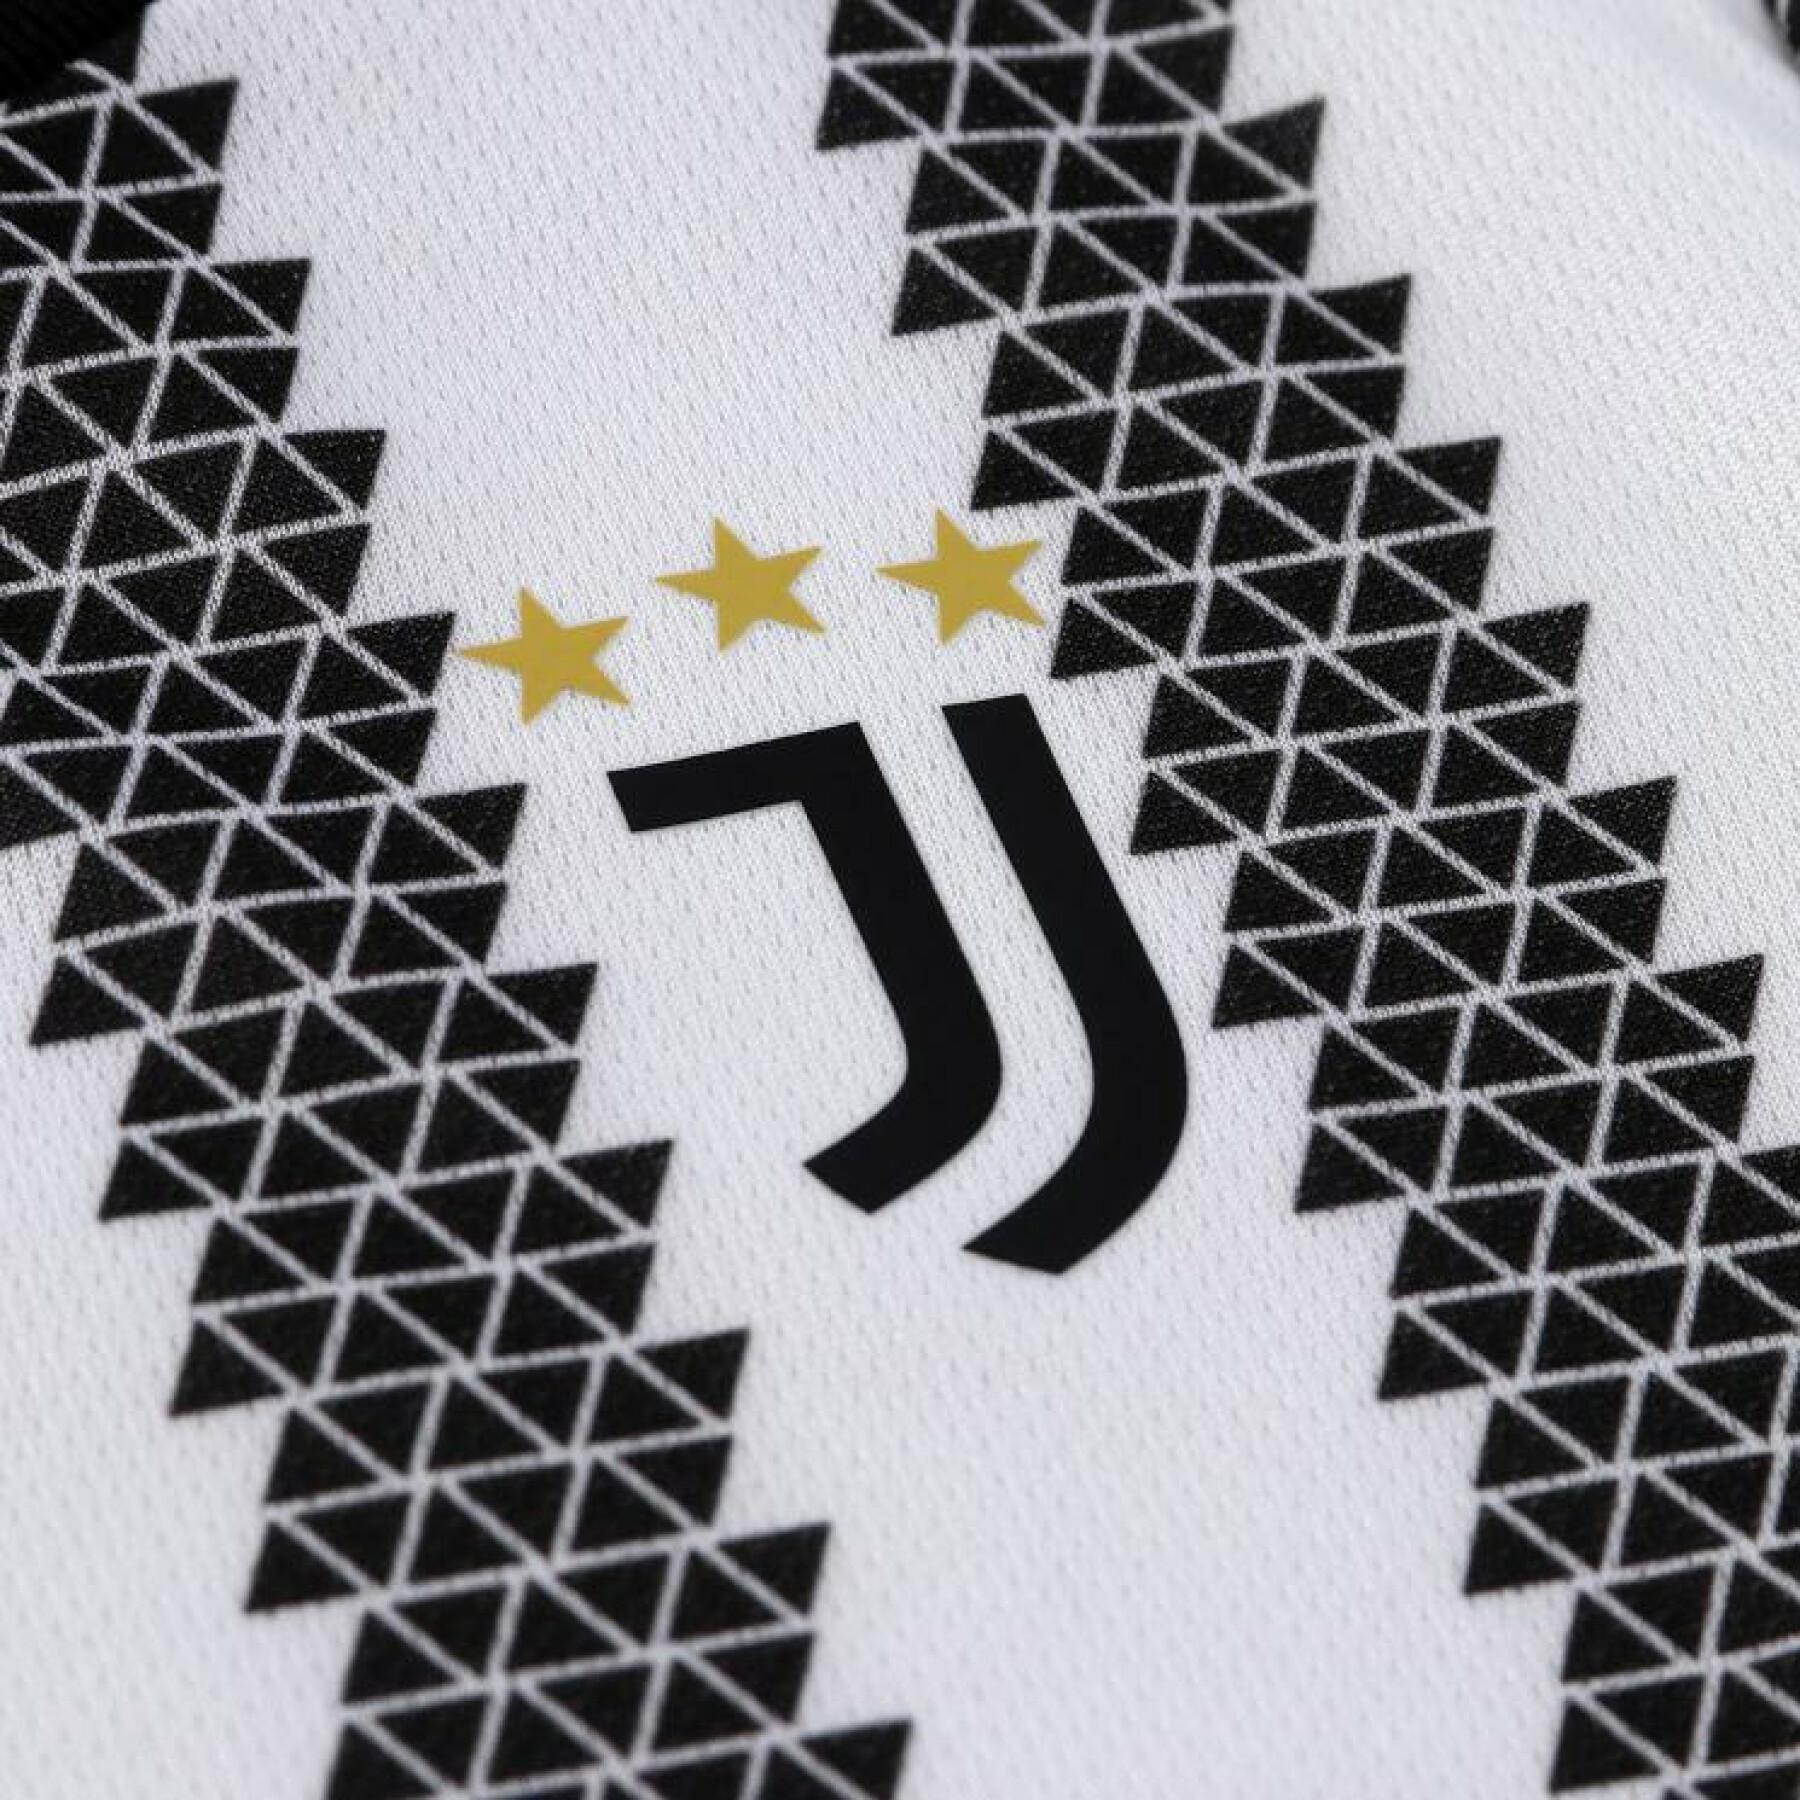 Mini kit doméstico para crianças Juventus Turin 2022/23